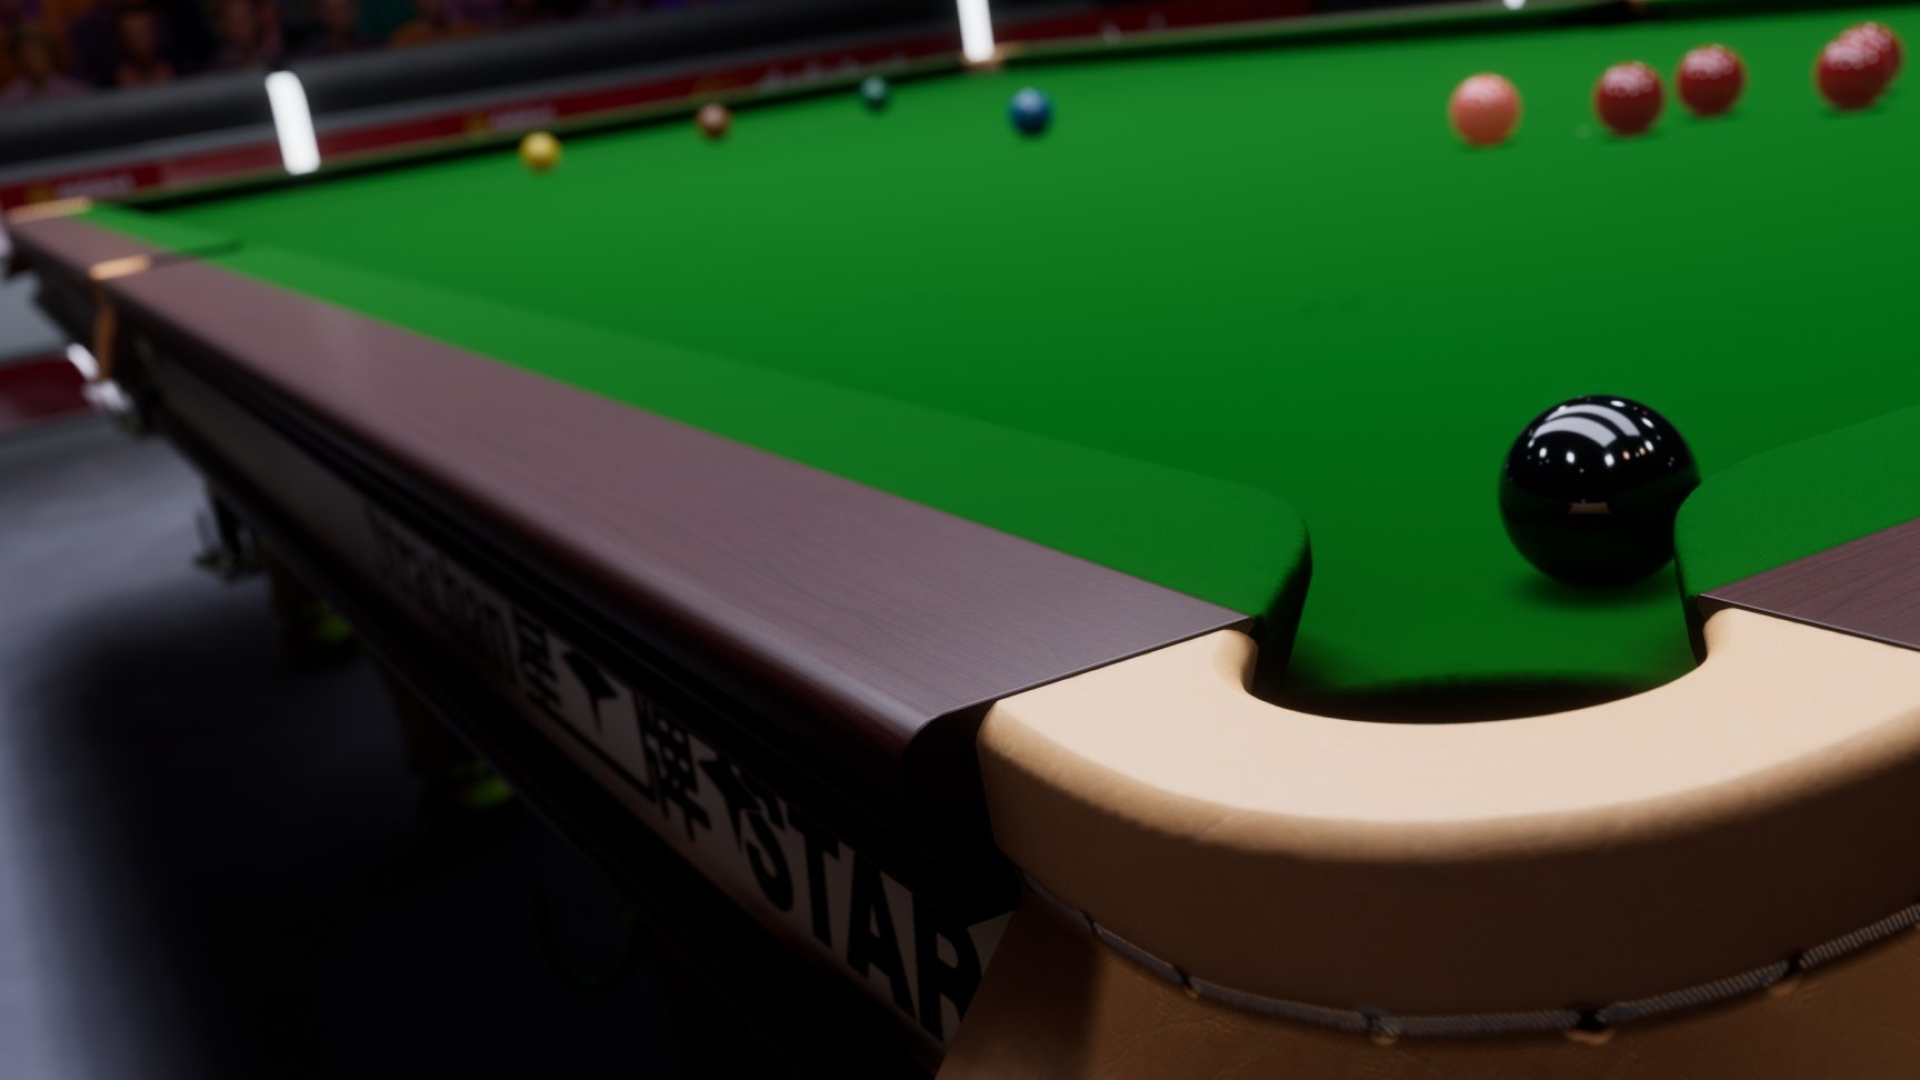 Snooker: A black ball near the drop pocket - 3D rendered model of a professional cue sport. 1920x1080 Full HD Wallpaper.